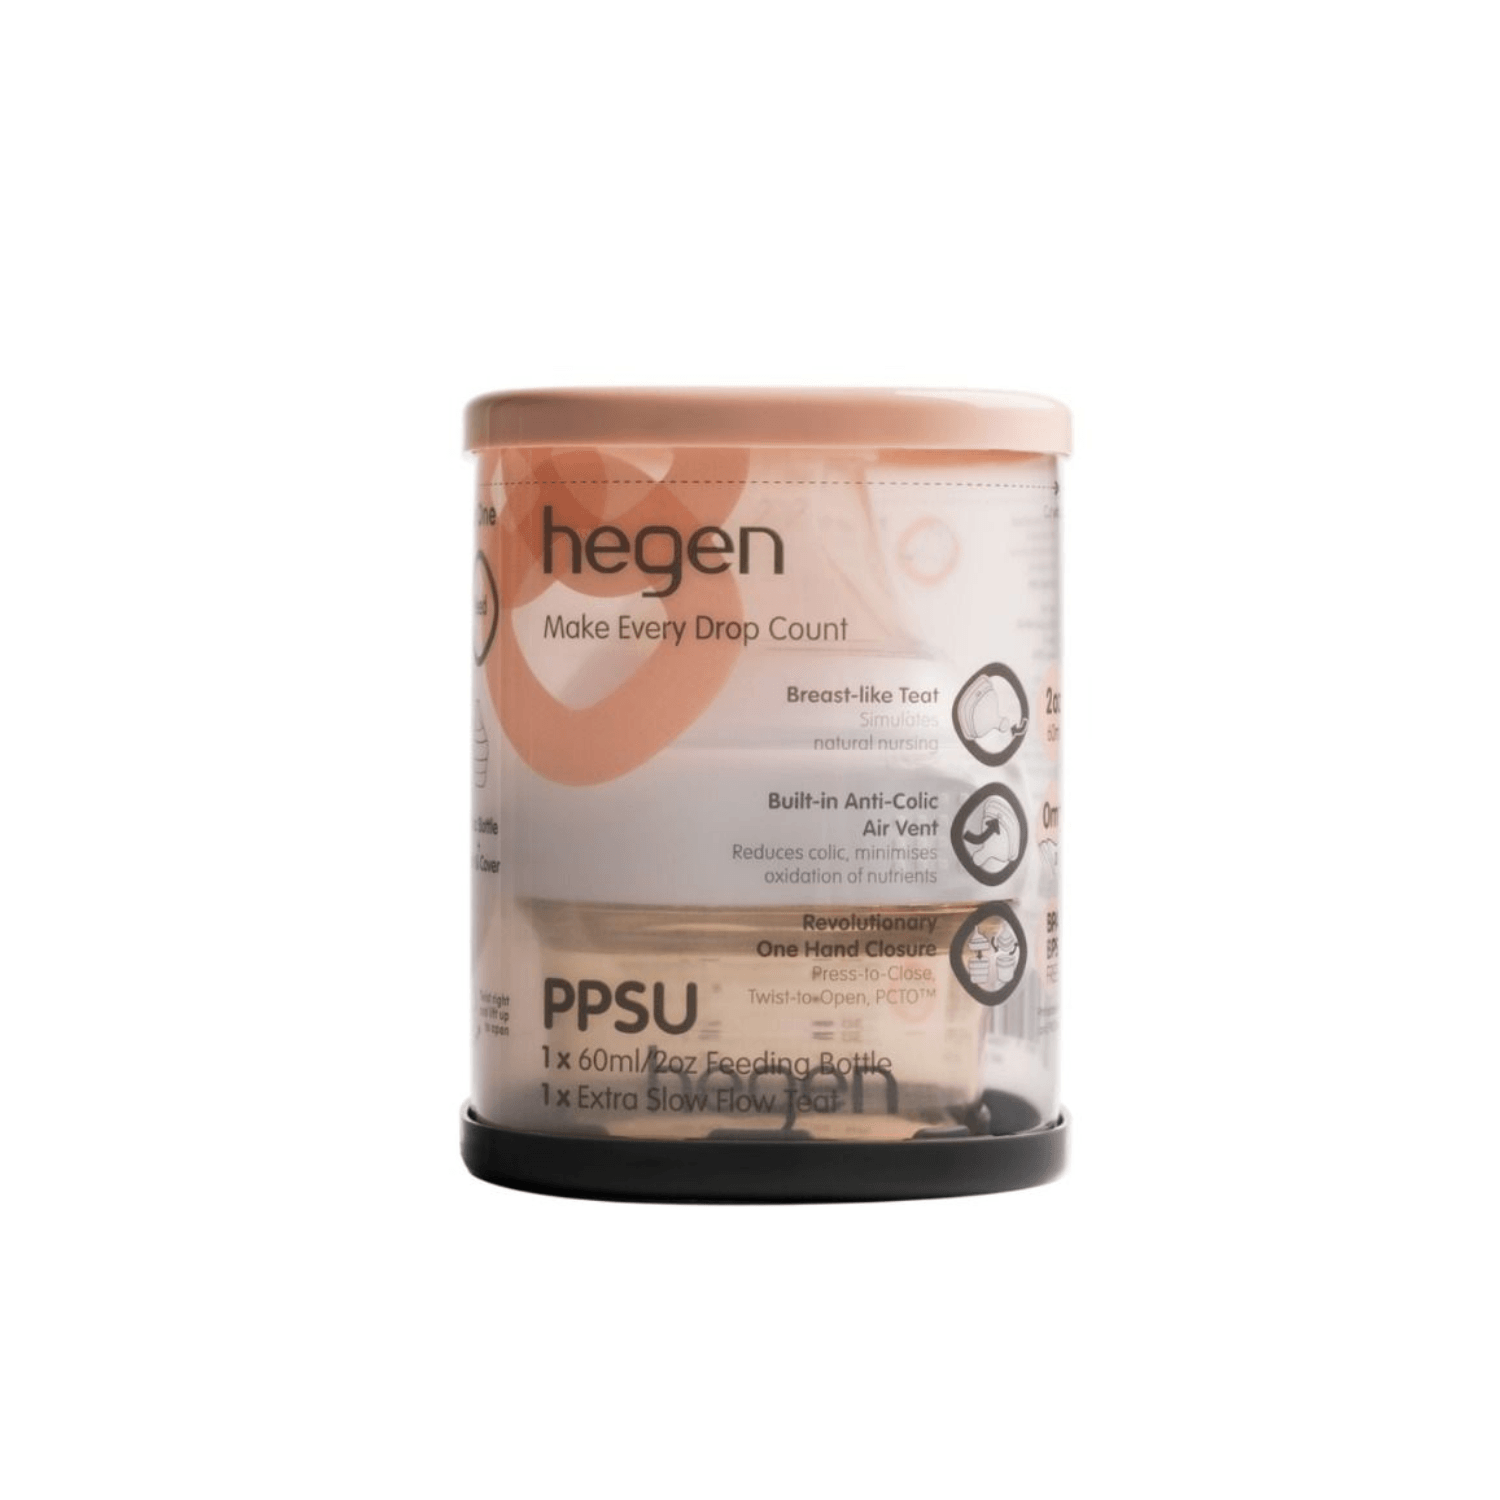 Hegen PCTO™ 60ml/2oz Feeding Bottle PPSU with Extra Slow Flow Teat (0 months) - hegen.us